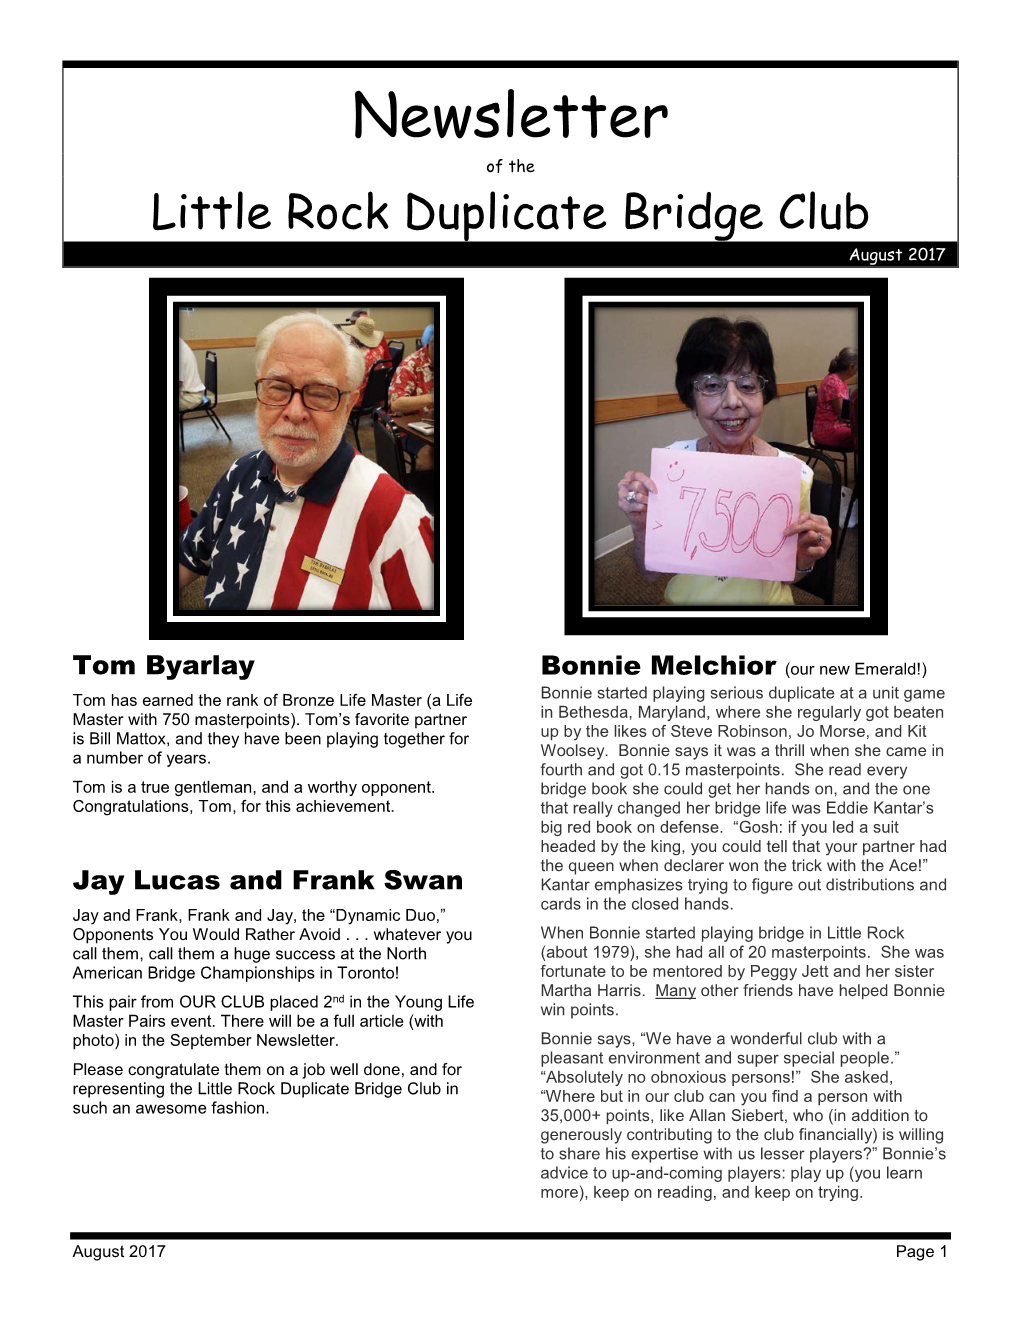 Newsletter of the Little Rock Duplicate Bridge Club August 2017